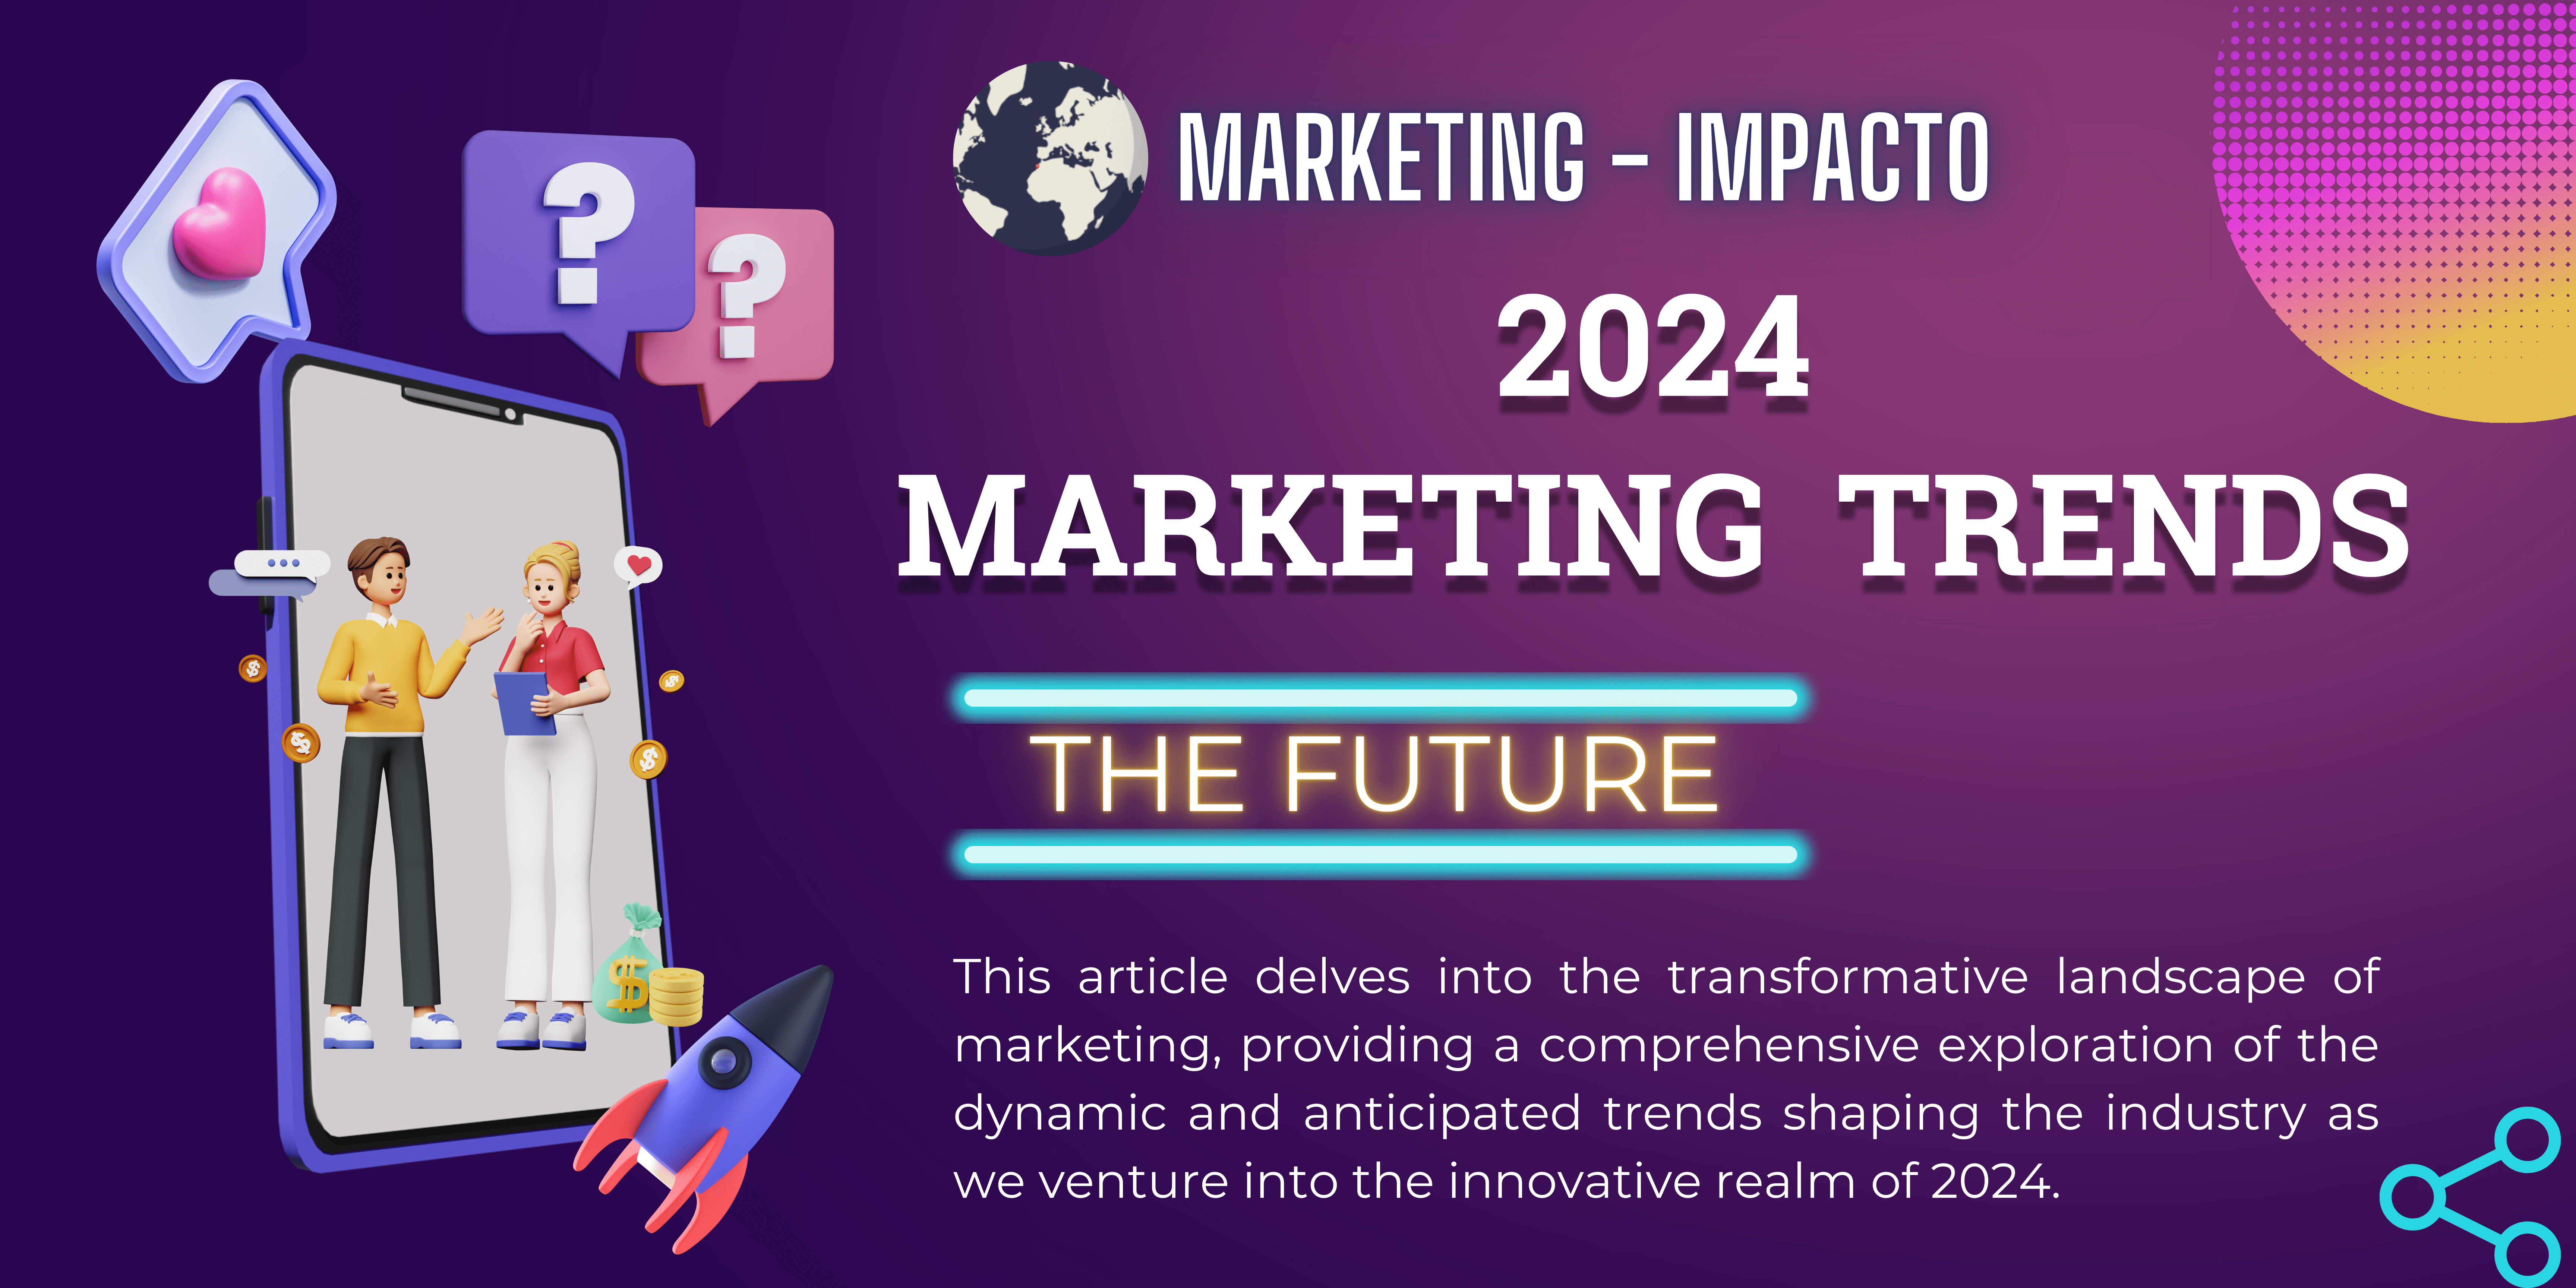 mareketing Trends by Marketing-Impacto